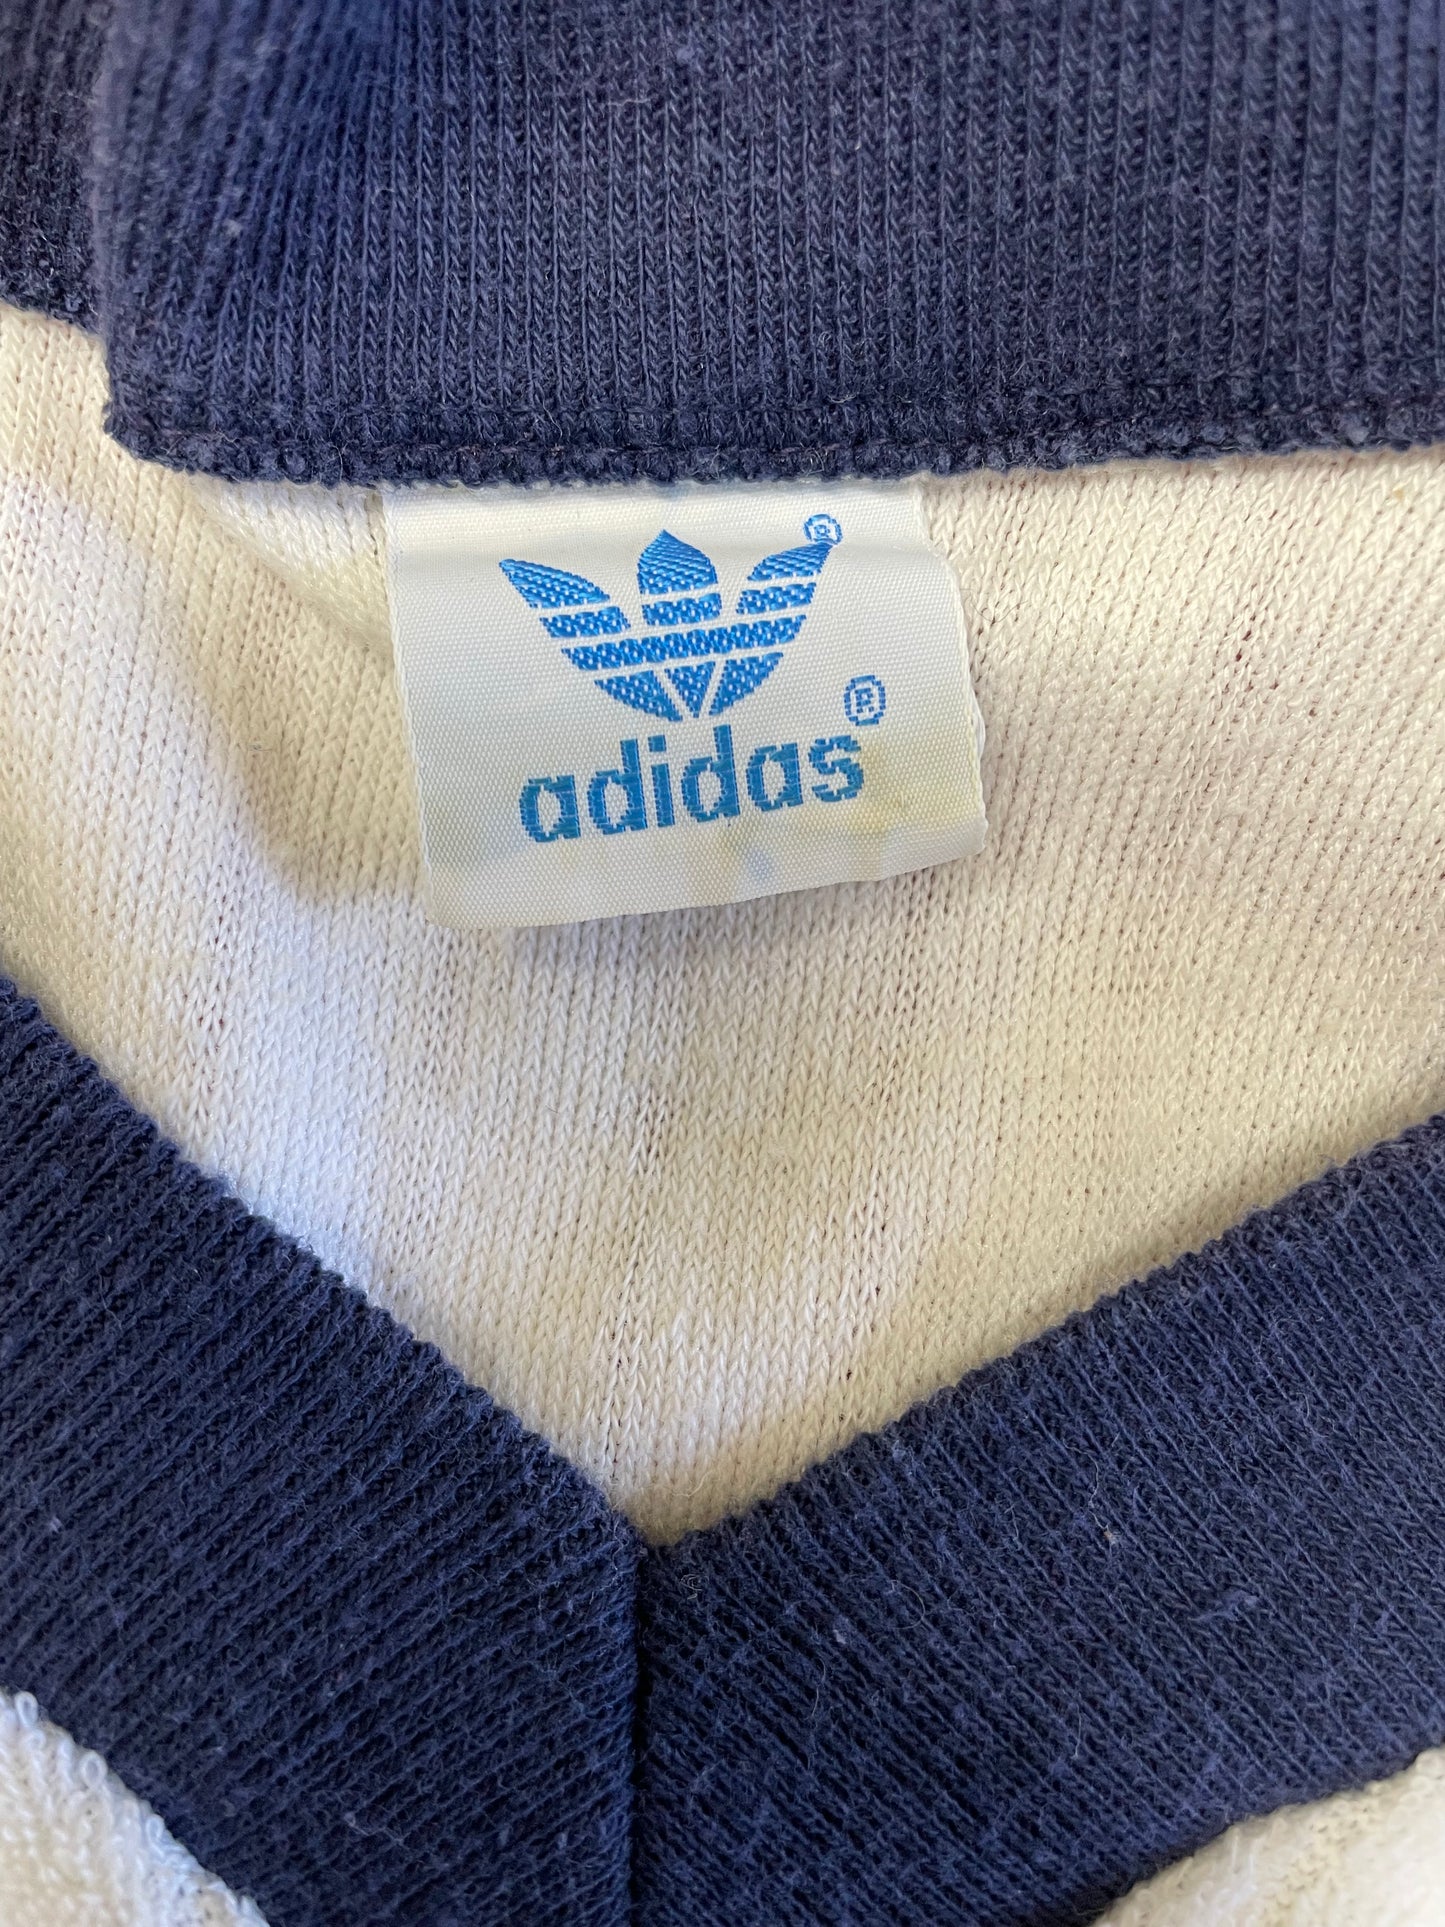 Vintage Adidas Tennis Sweater